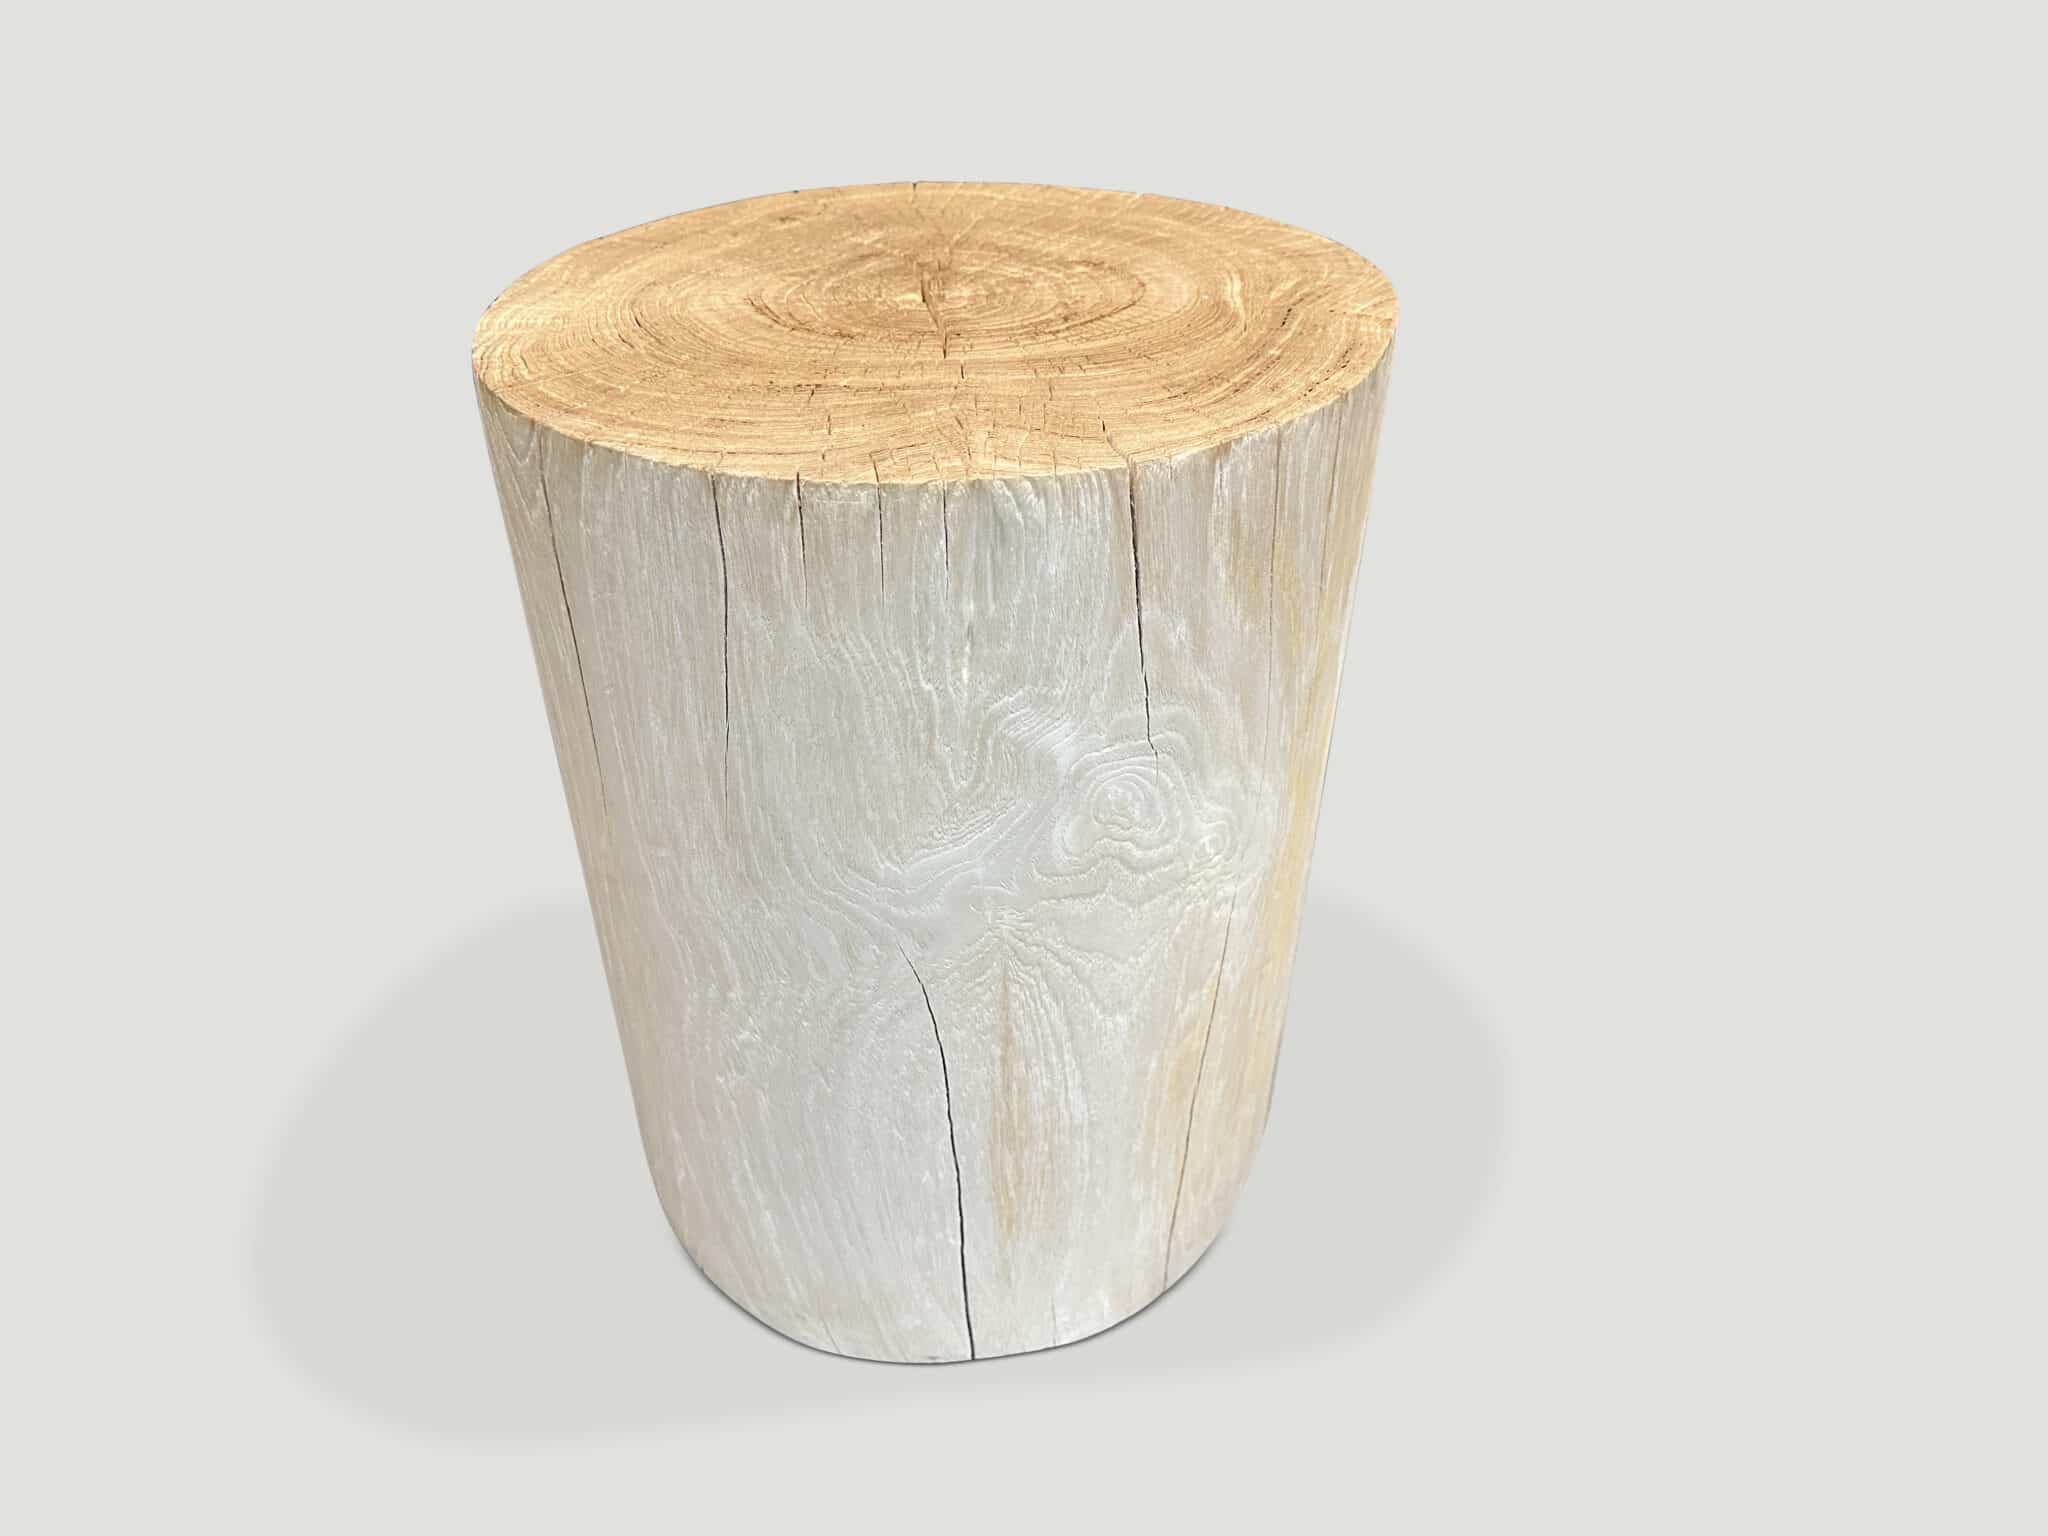 Reclaimed teak wood side table or stool